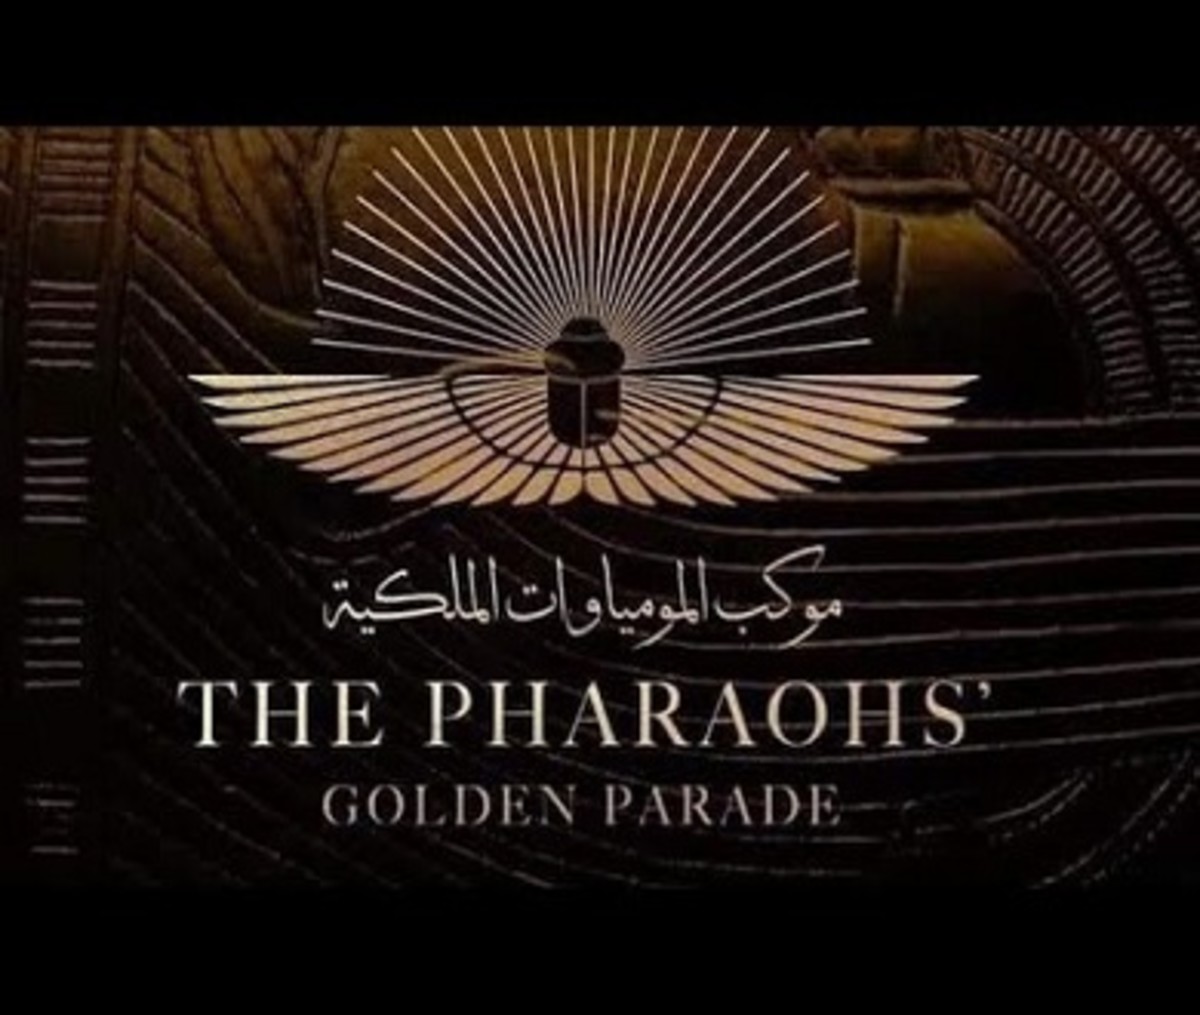 The Pharaohs' Golden Parade.. The Egyptians’ Gratitude to Their Grandparents!